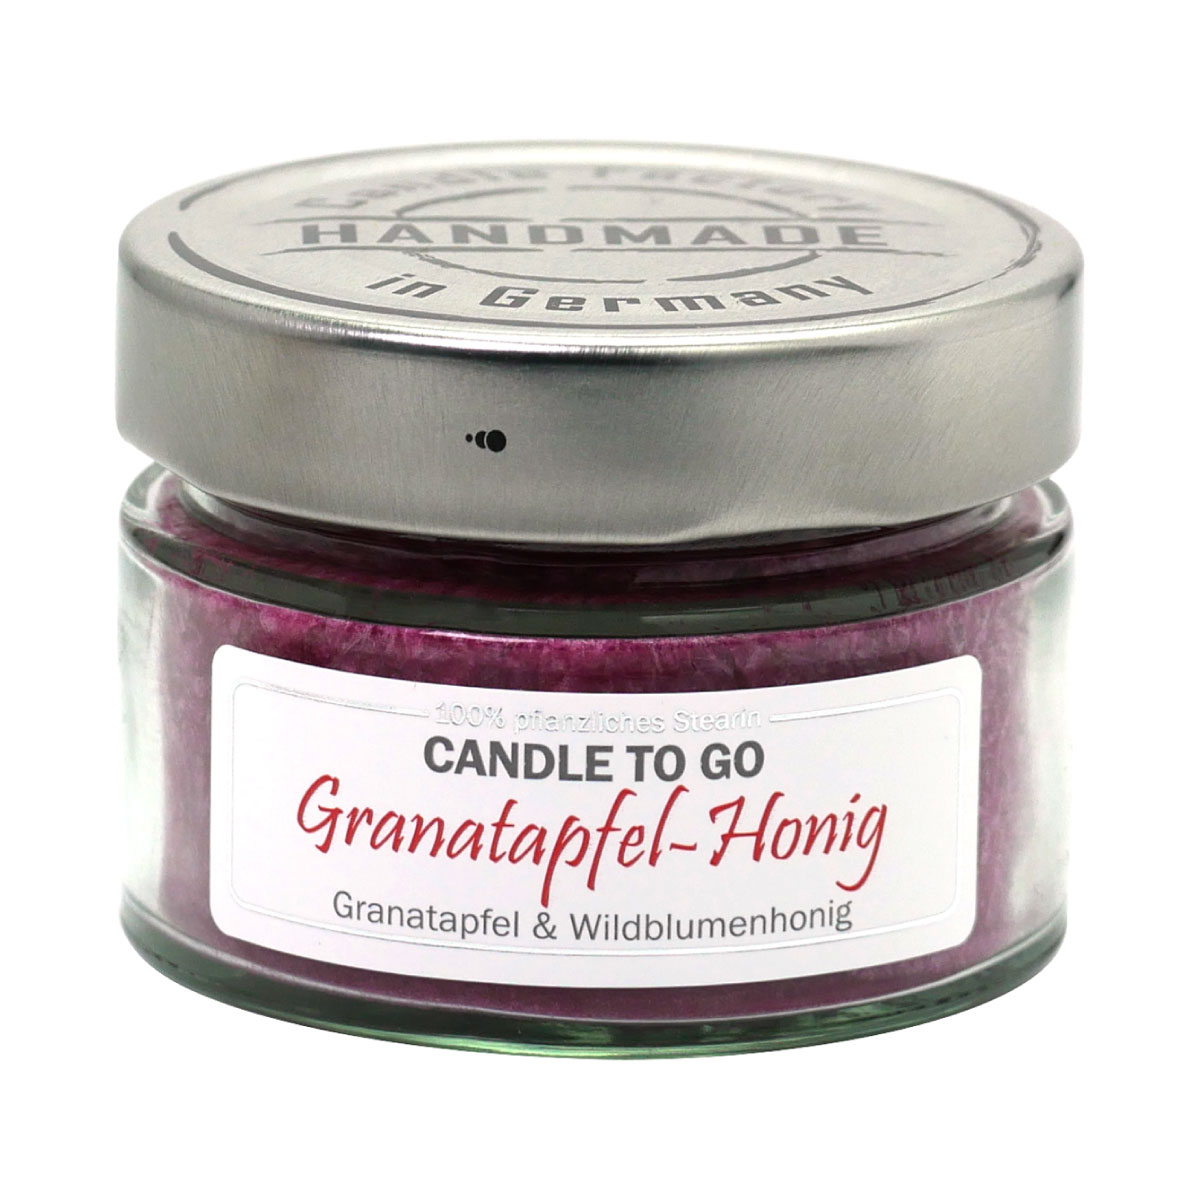 Granatapfel Honig - Candle to Go Duftkerze von Candle Factory